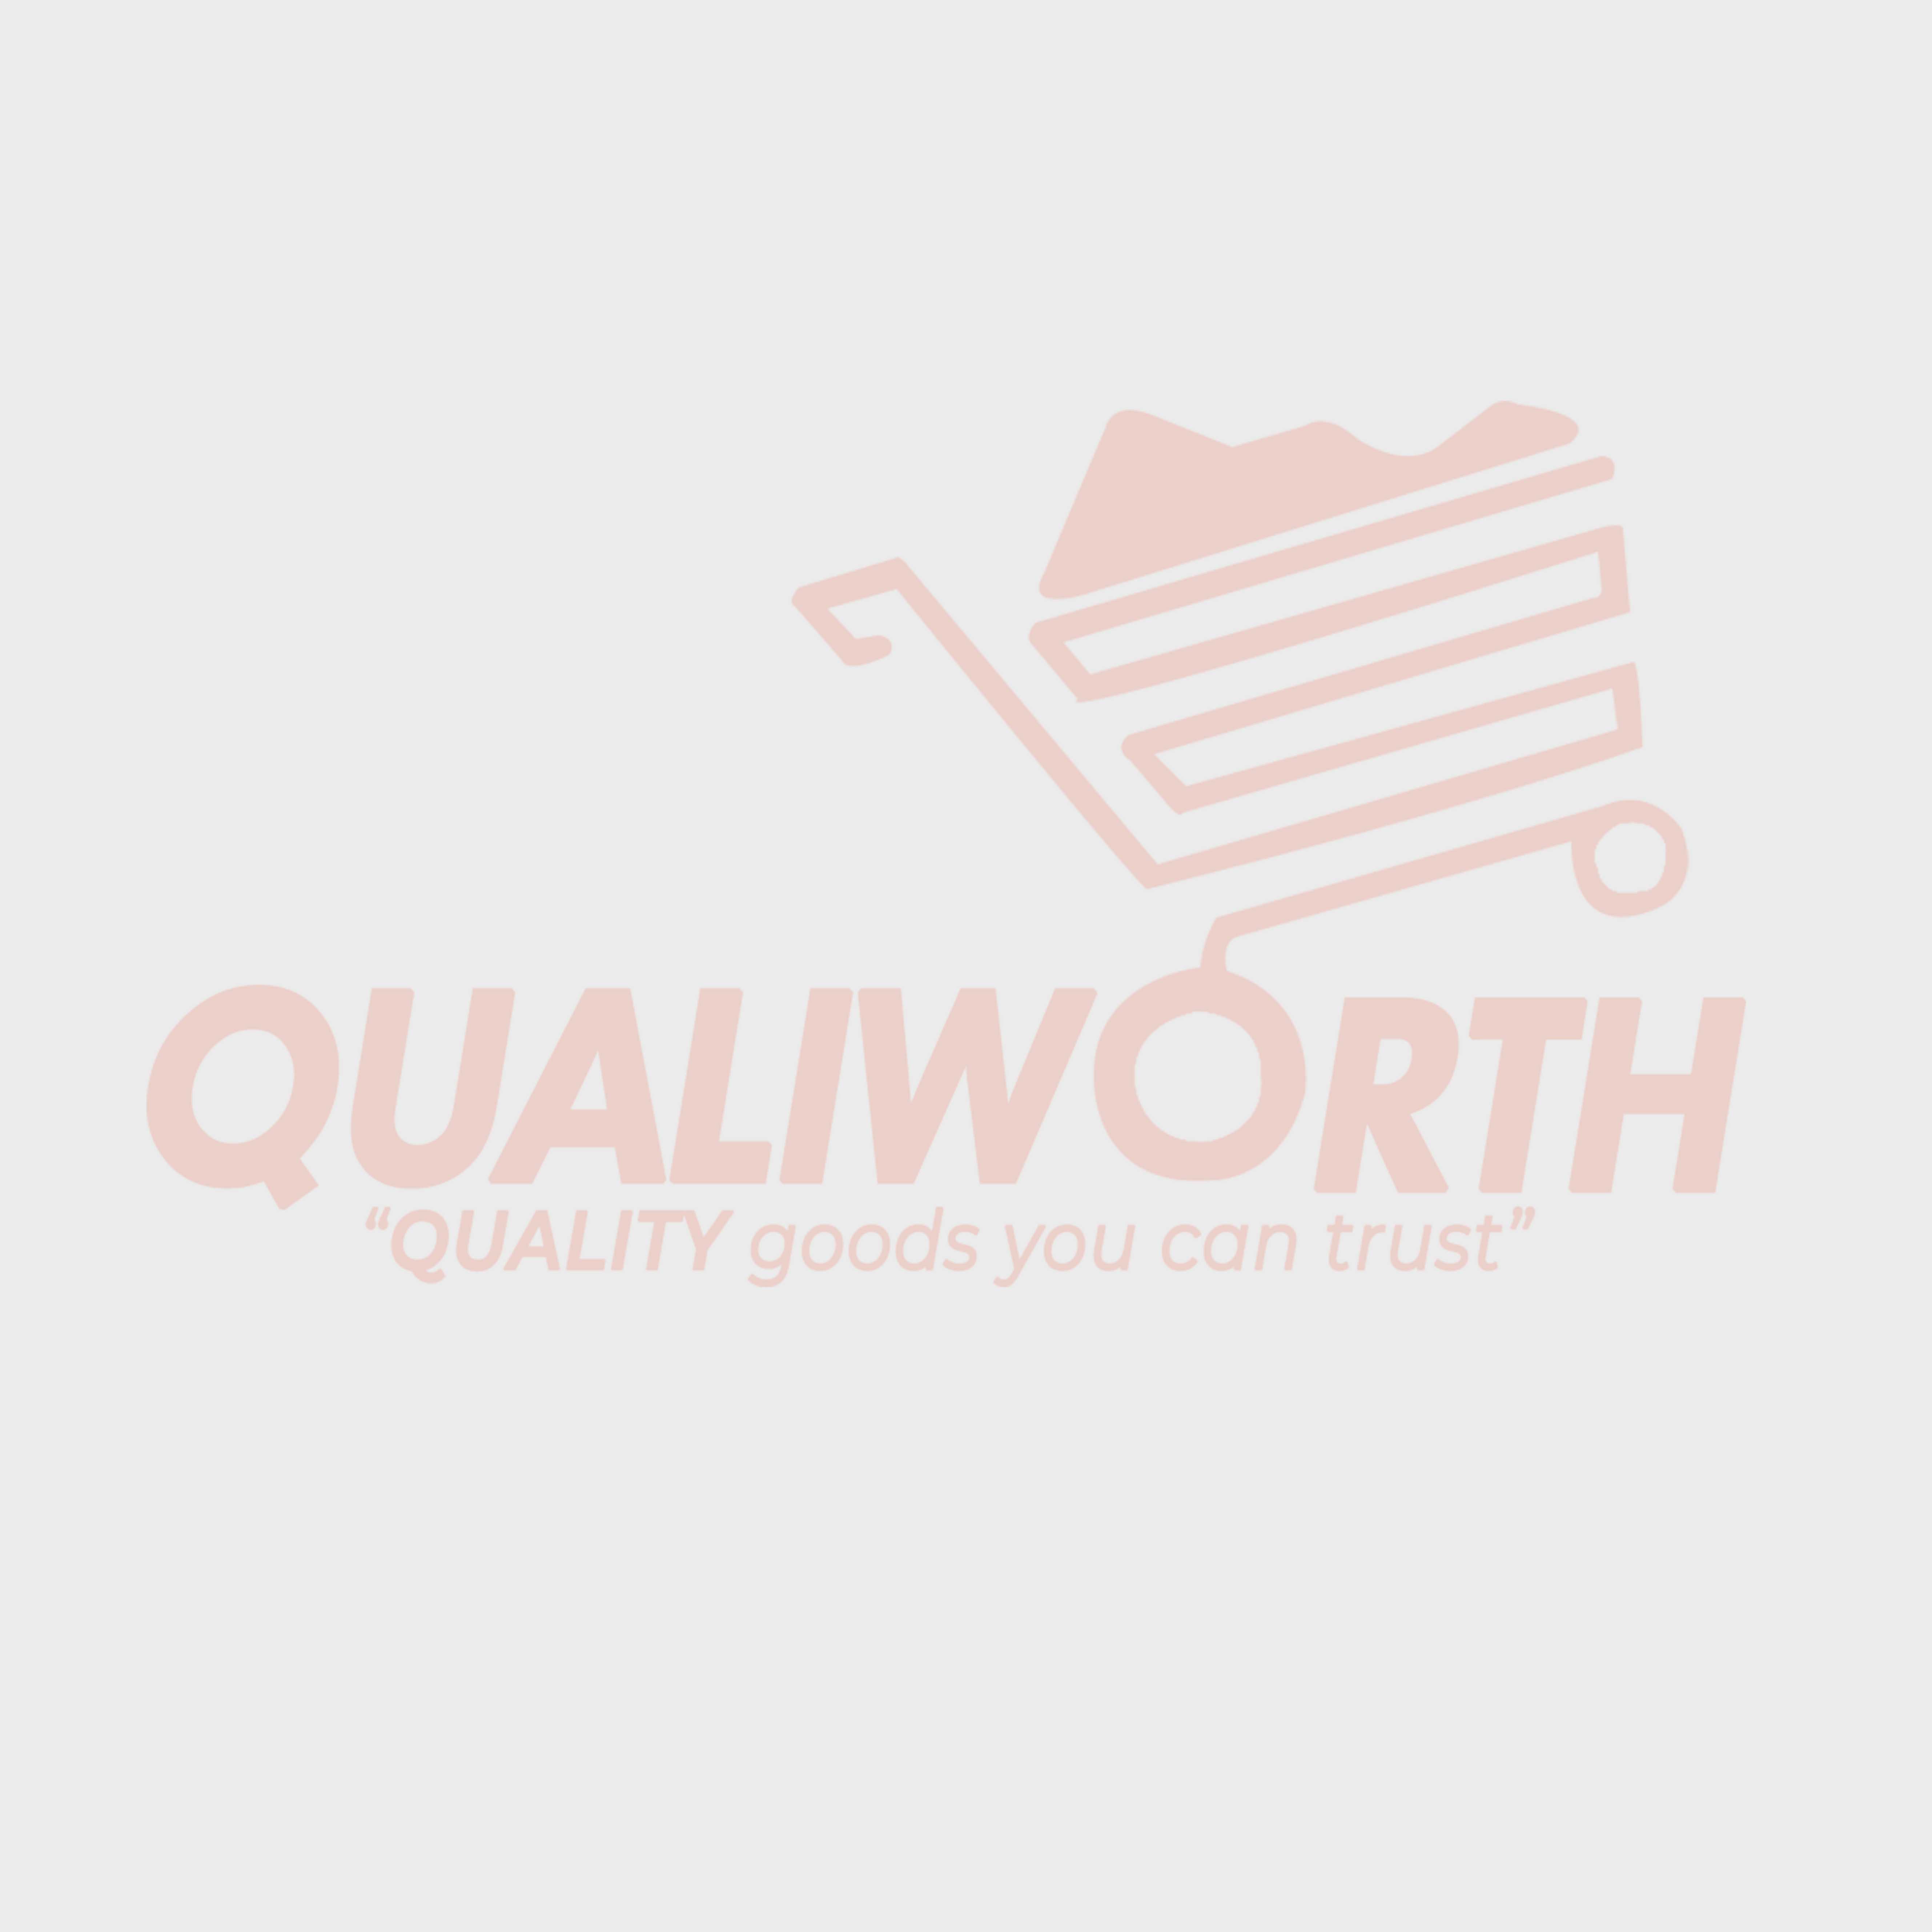 Qualiworth Ecommerce Template